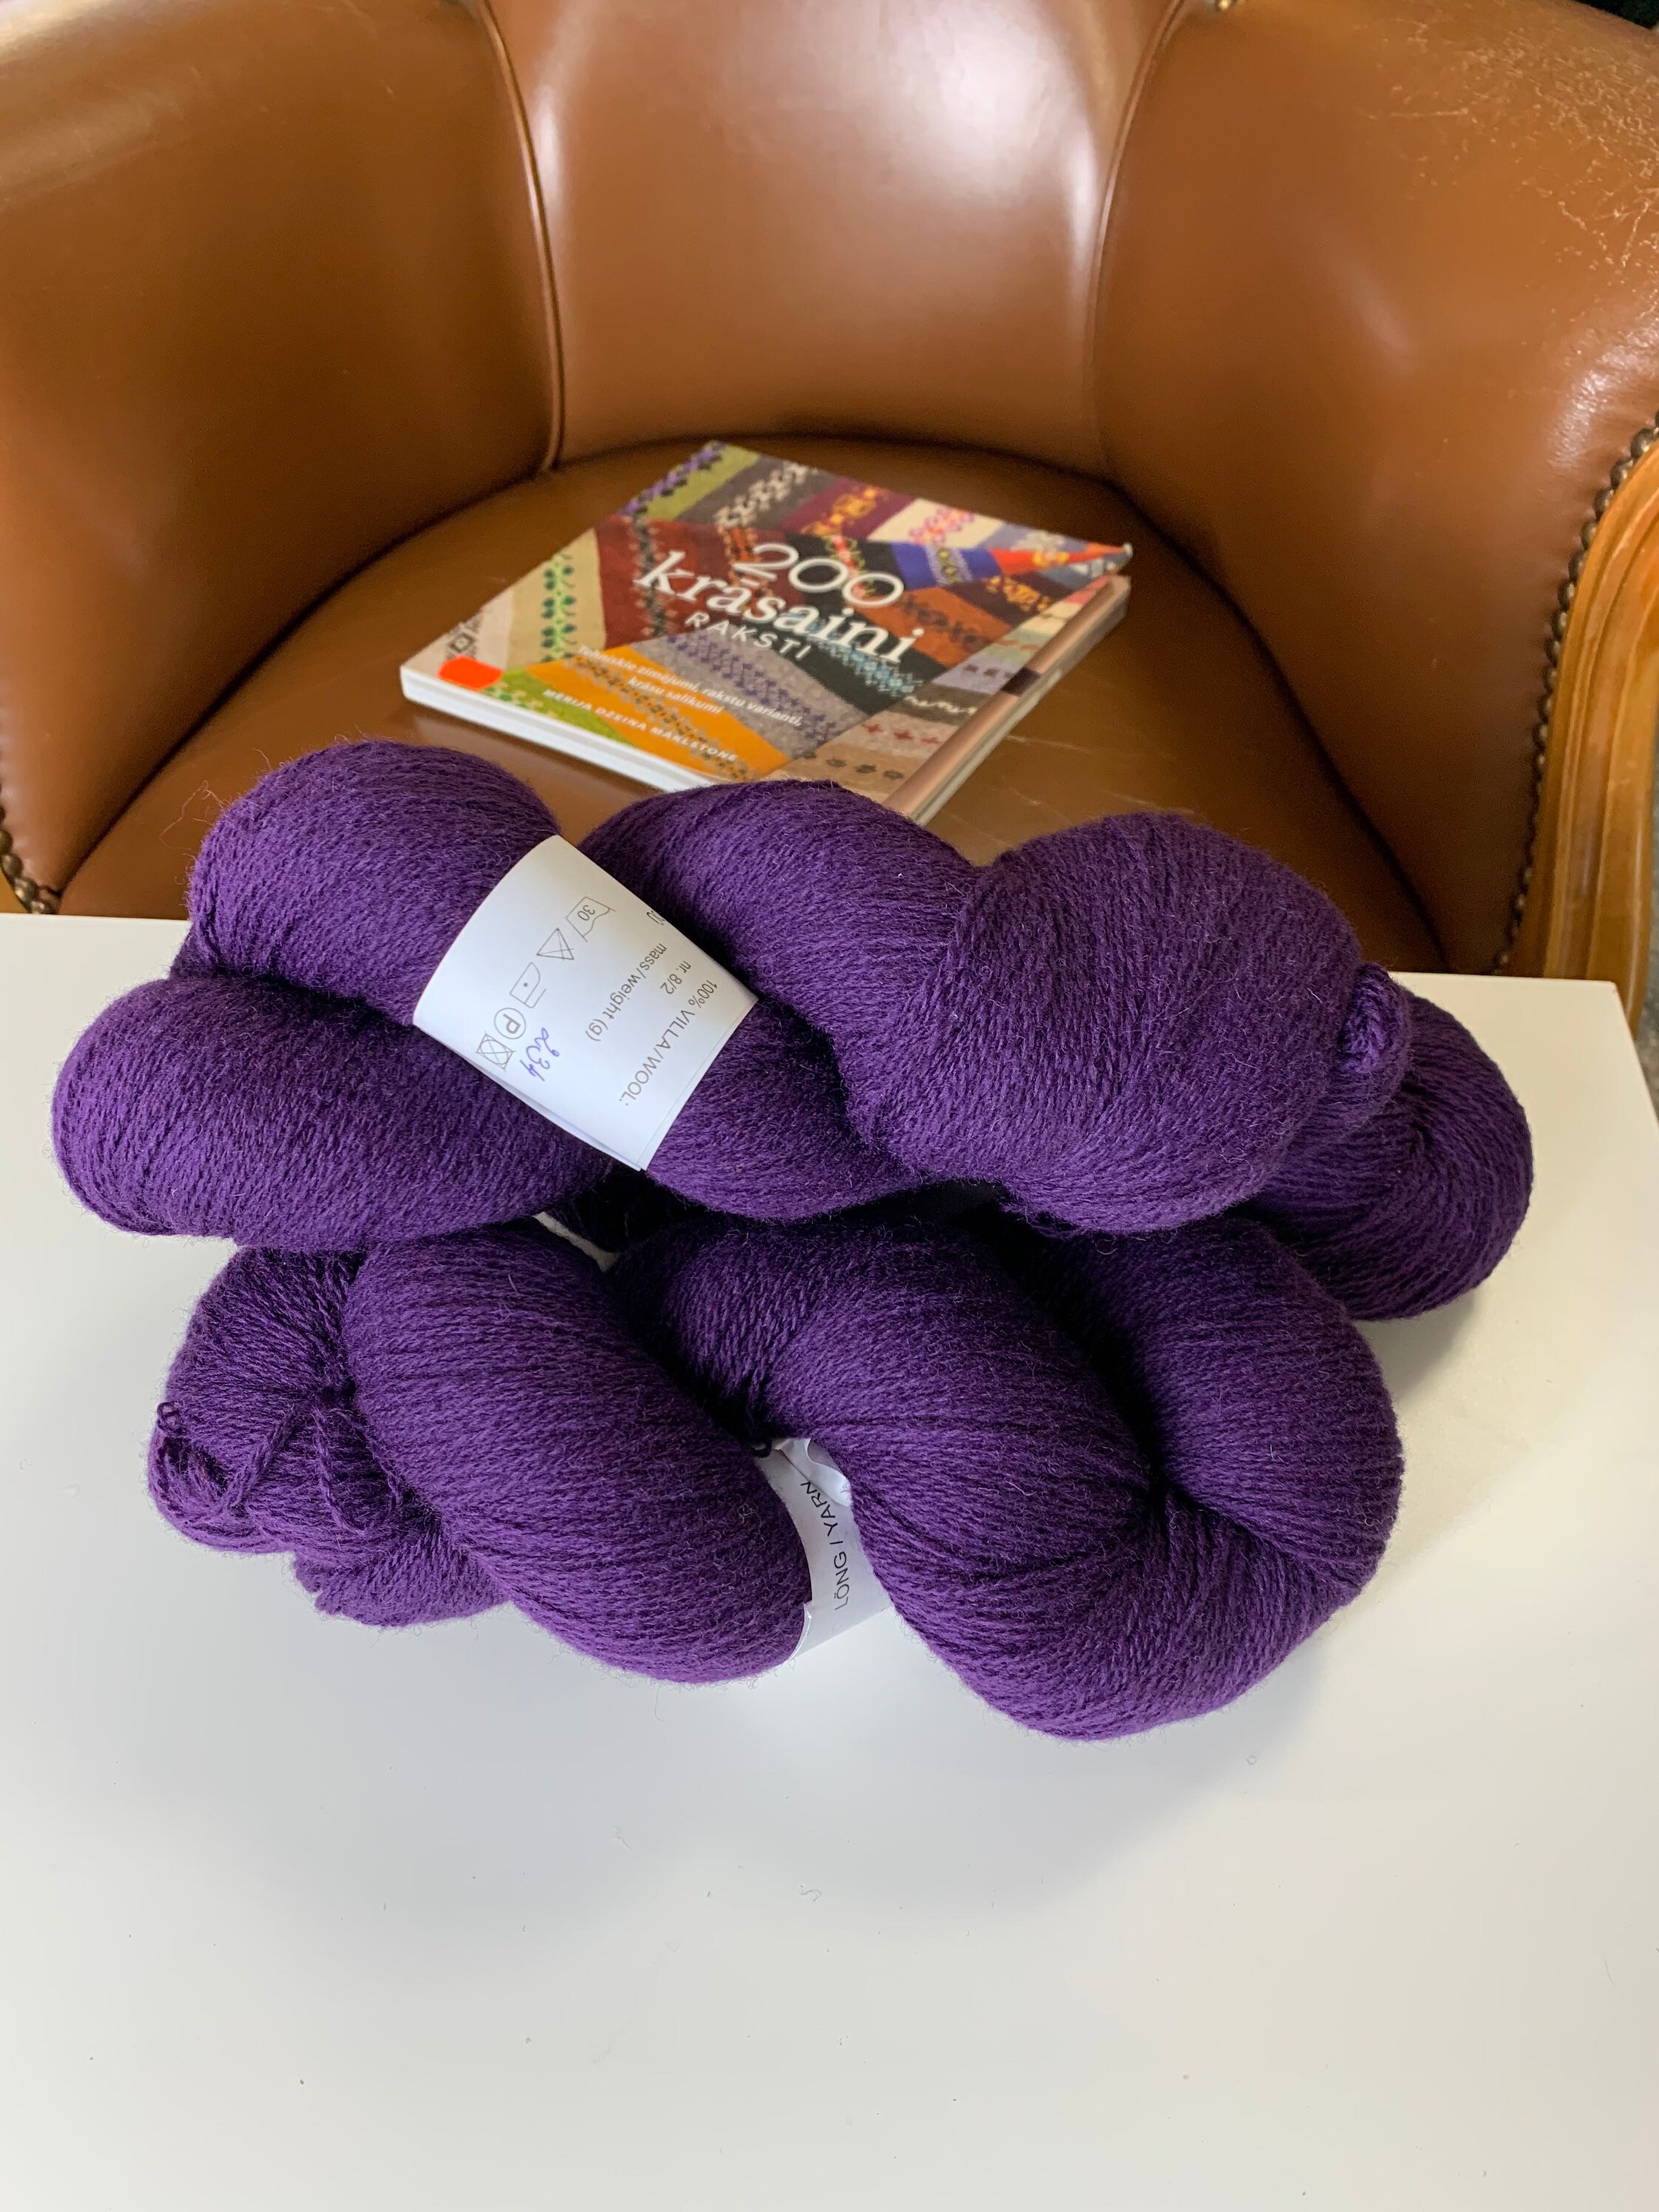 Natural Wool Yarn,100% Sheep Wool Yarn Lot, Hand & Machine Knitting Malange Red  Yarn,wool Yarn for Crocheting Weaving, 8/2 Double Wool Wrap 